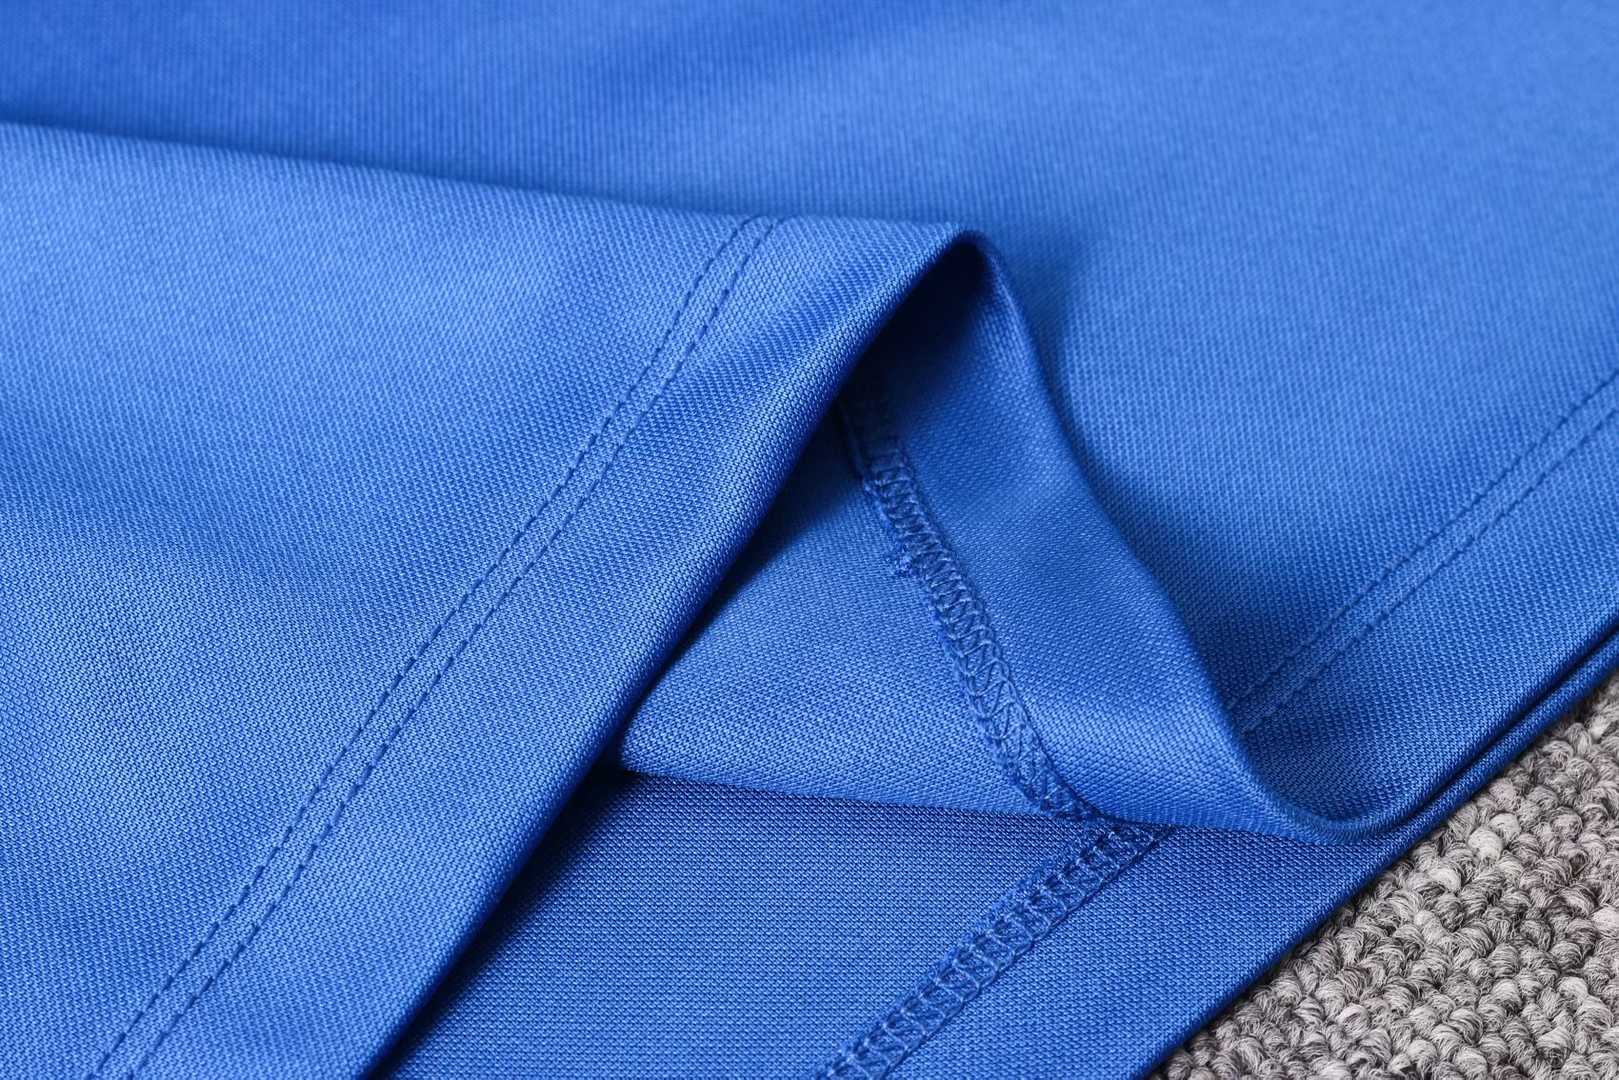 2020/21 England Blue Half Zip Mens Soccer Training Suit(Jacket + Pants)